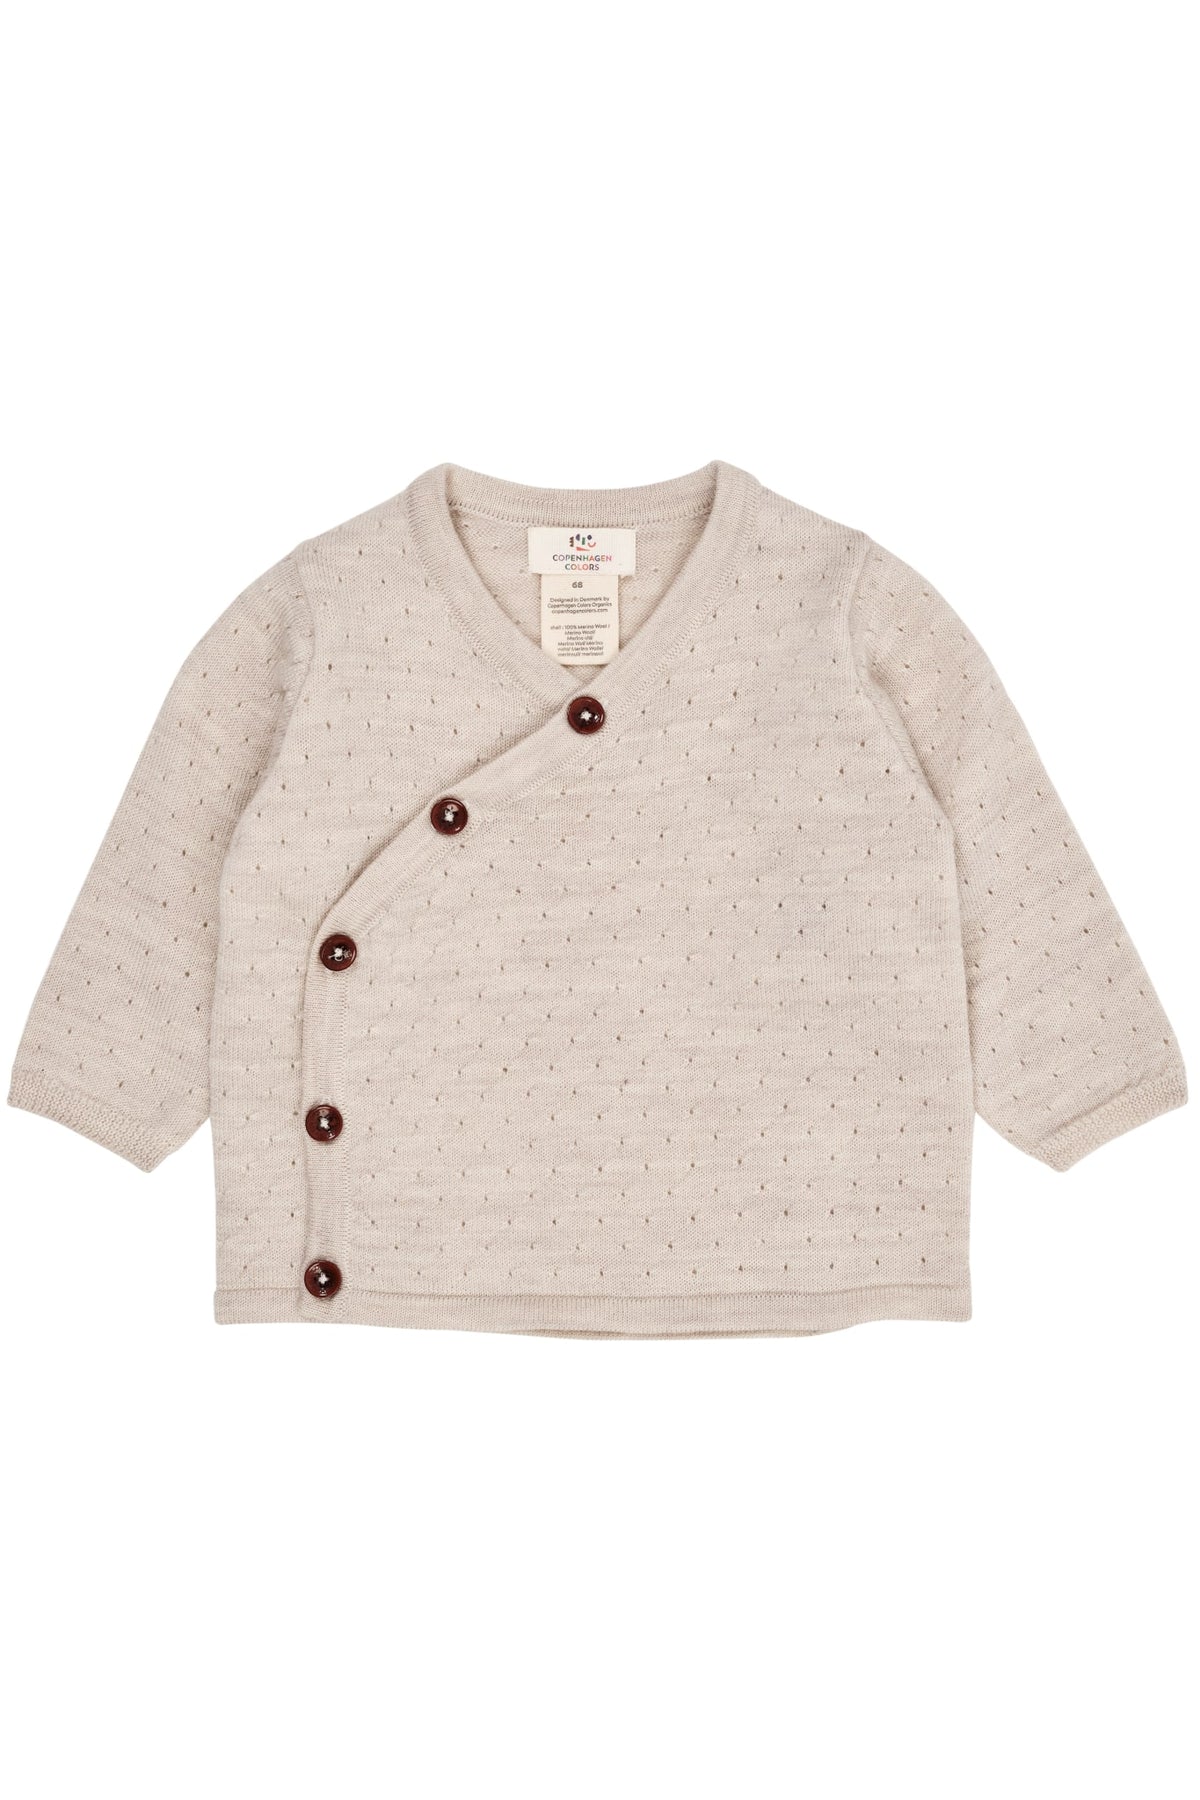 Merino Crossover Cardigan, Pale Cream Melange, Copenhagen Colors, 100% Merino Wool